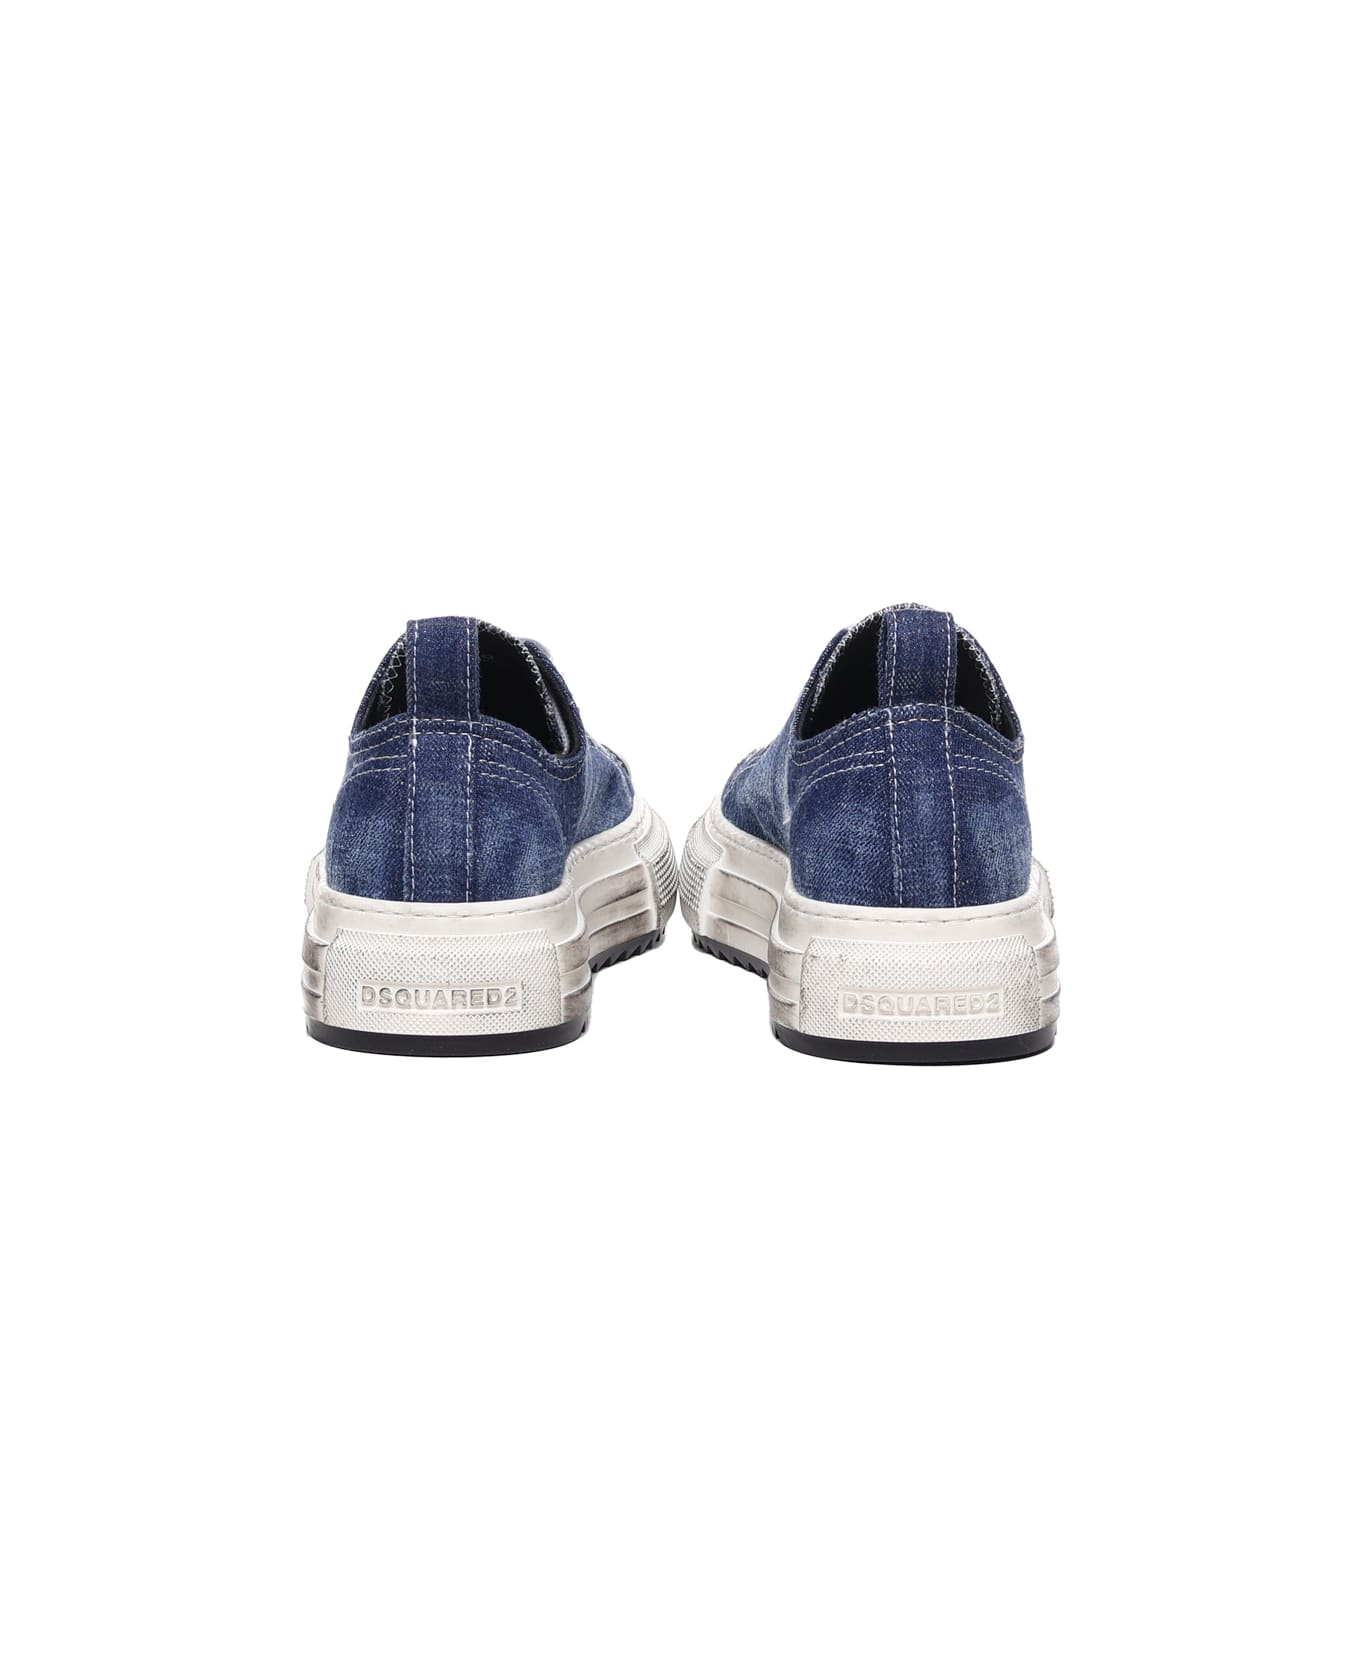 Dsquared2 Berlin Fabric Low-top Sneakers - Denim blue